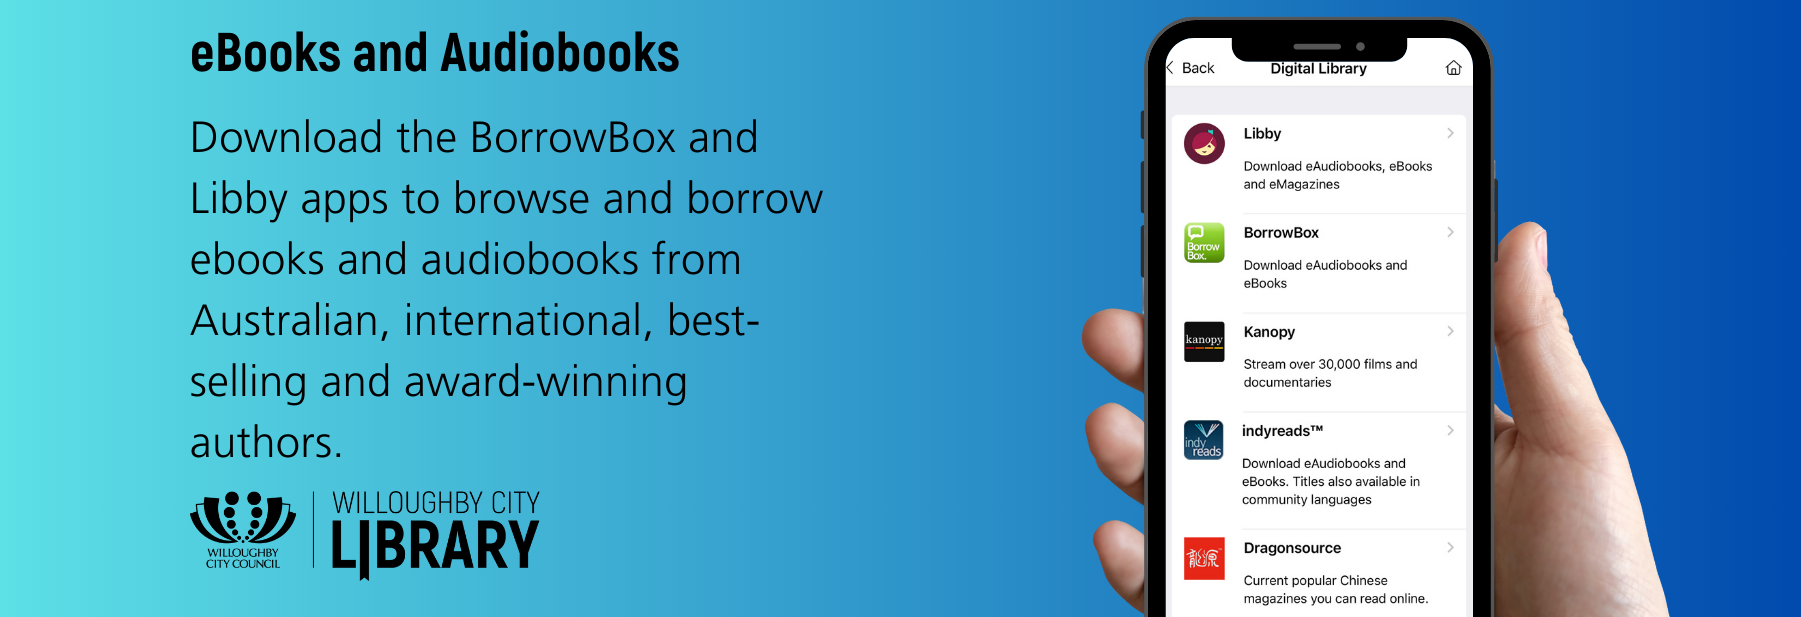 eBook and Audiobooks